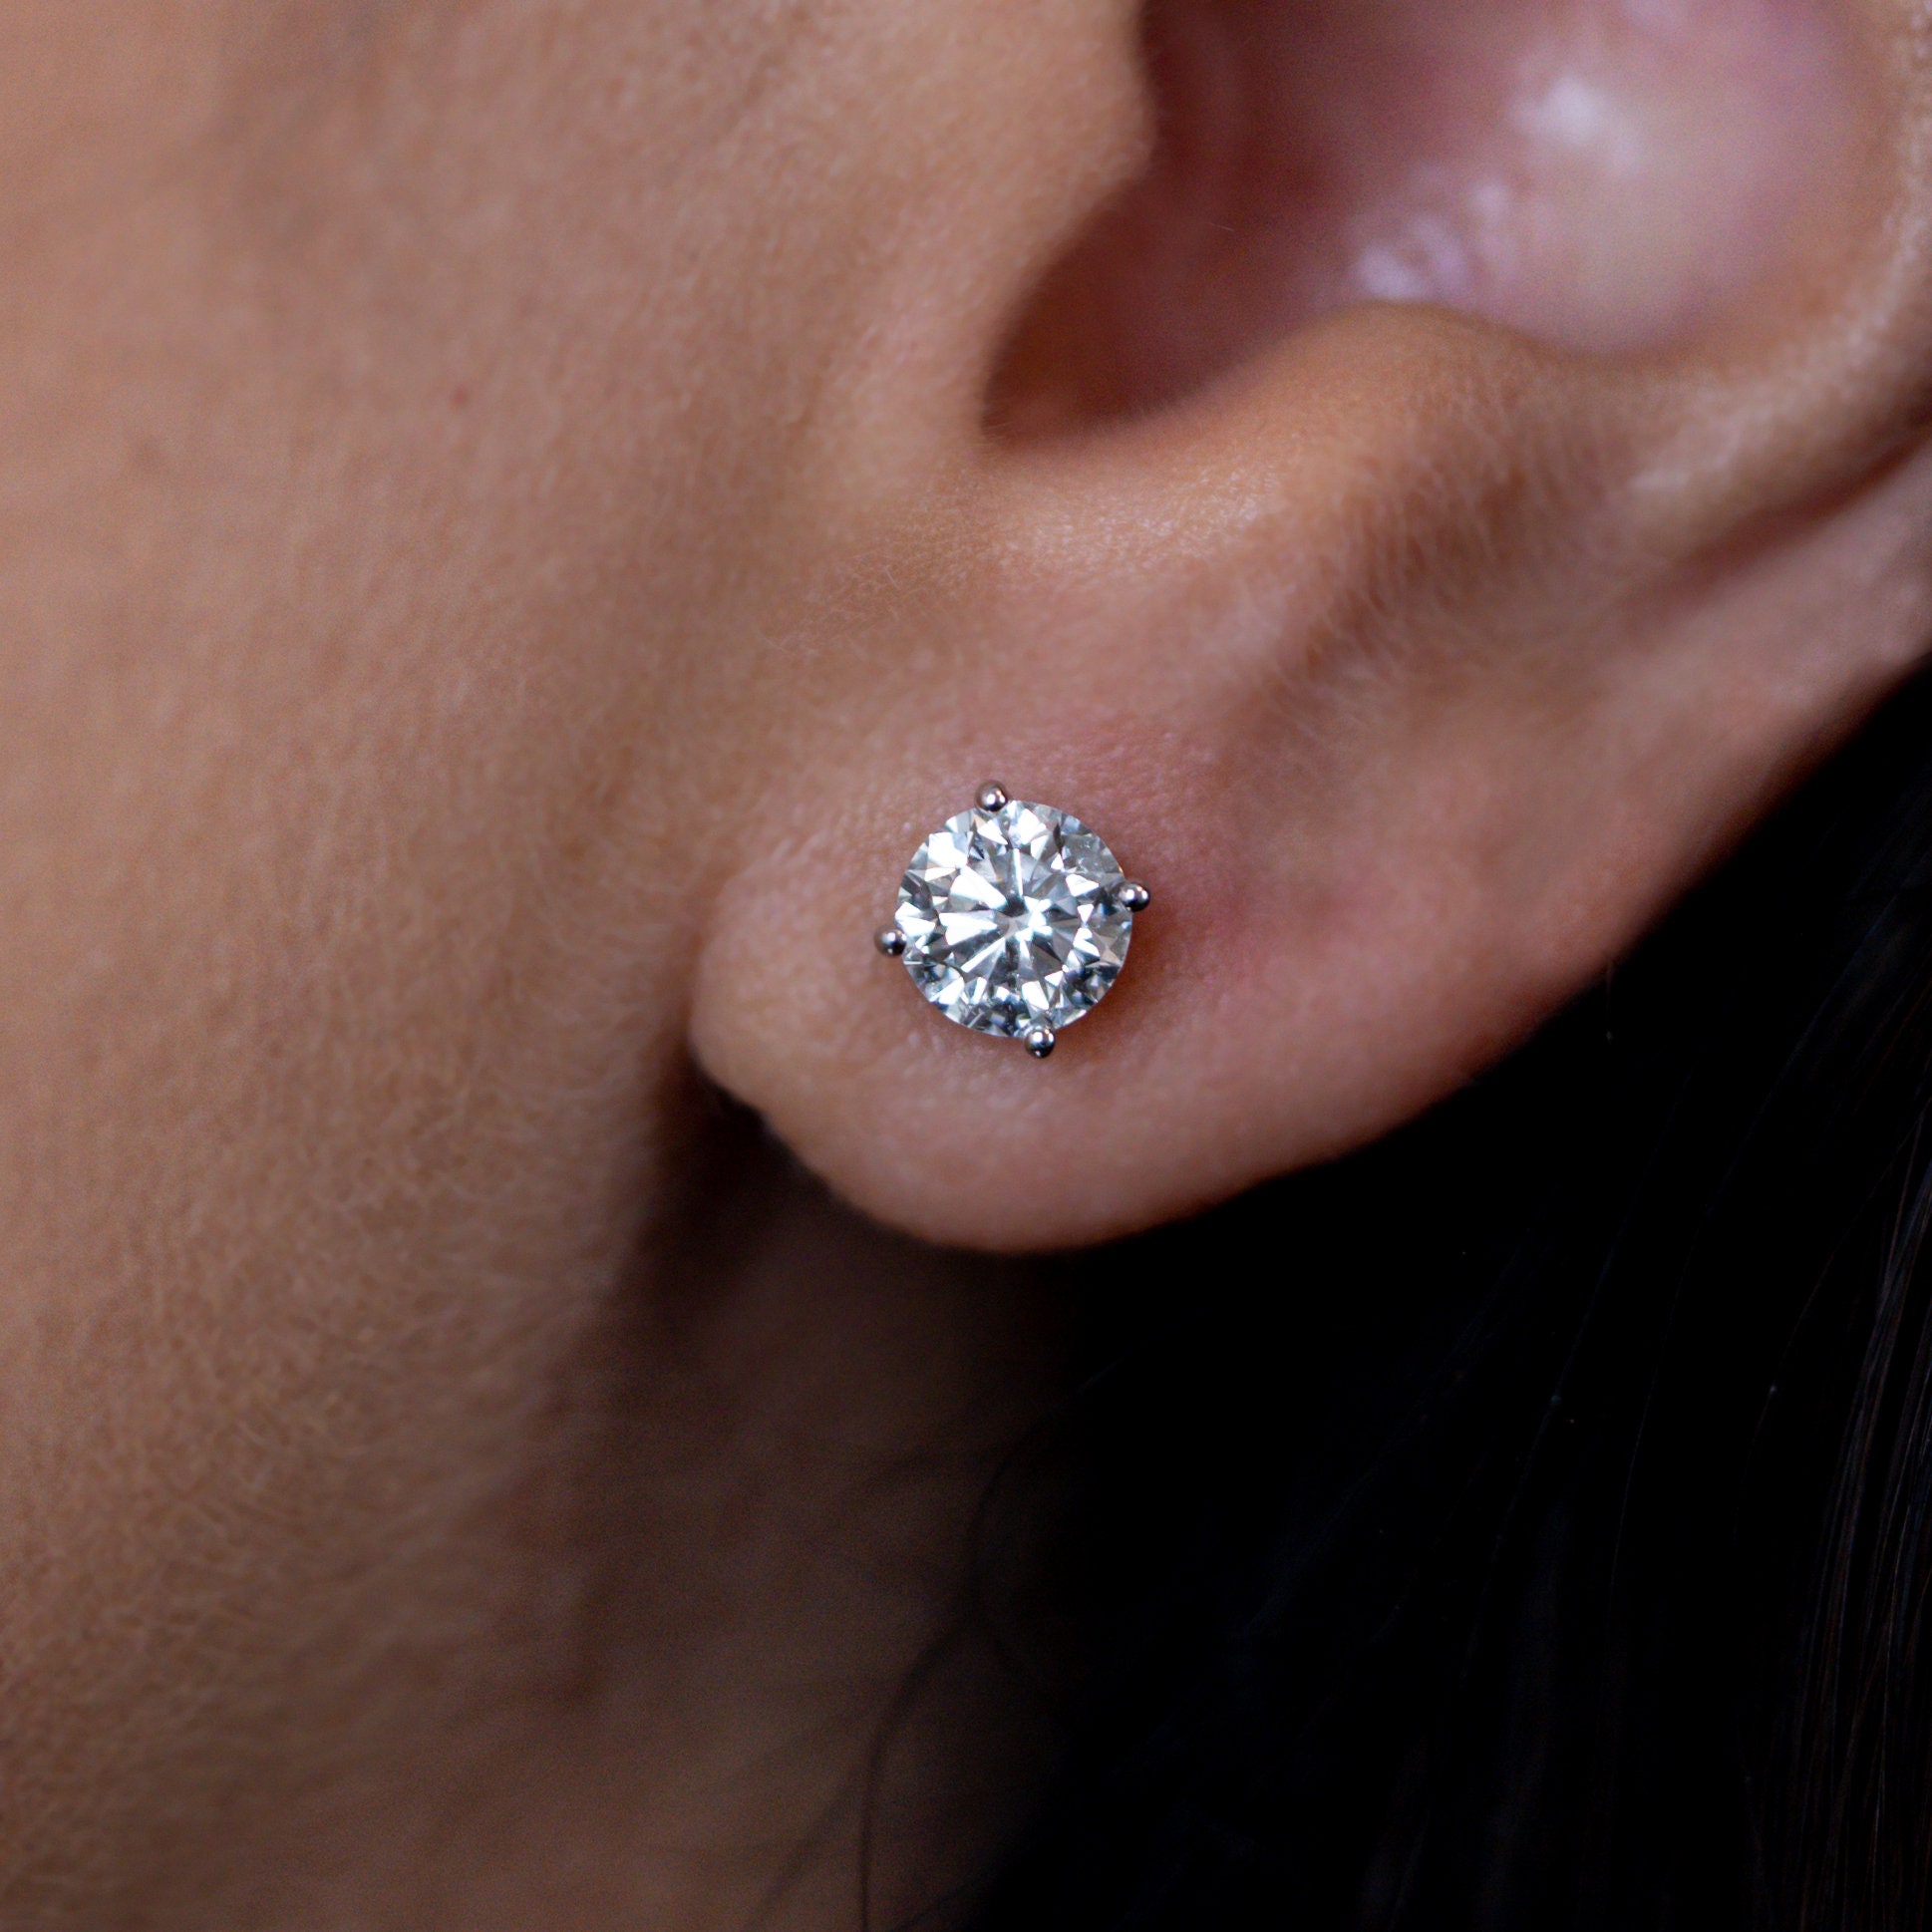 Affordable Platinum Diamond Stud Earrings (1 Ctw)